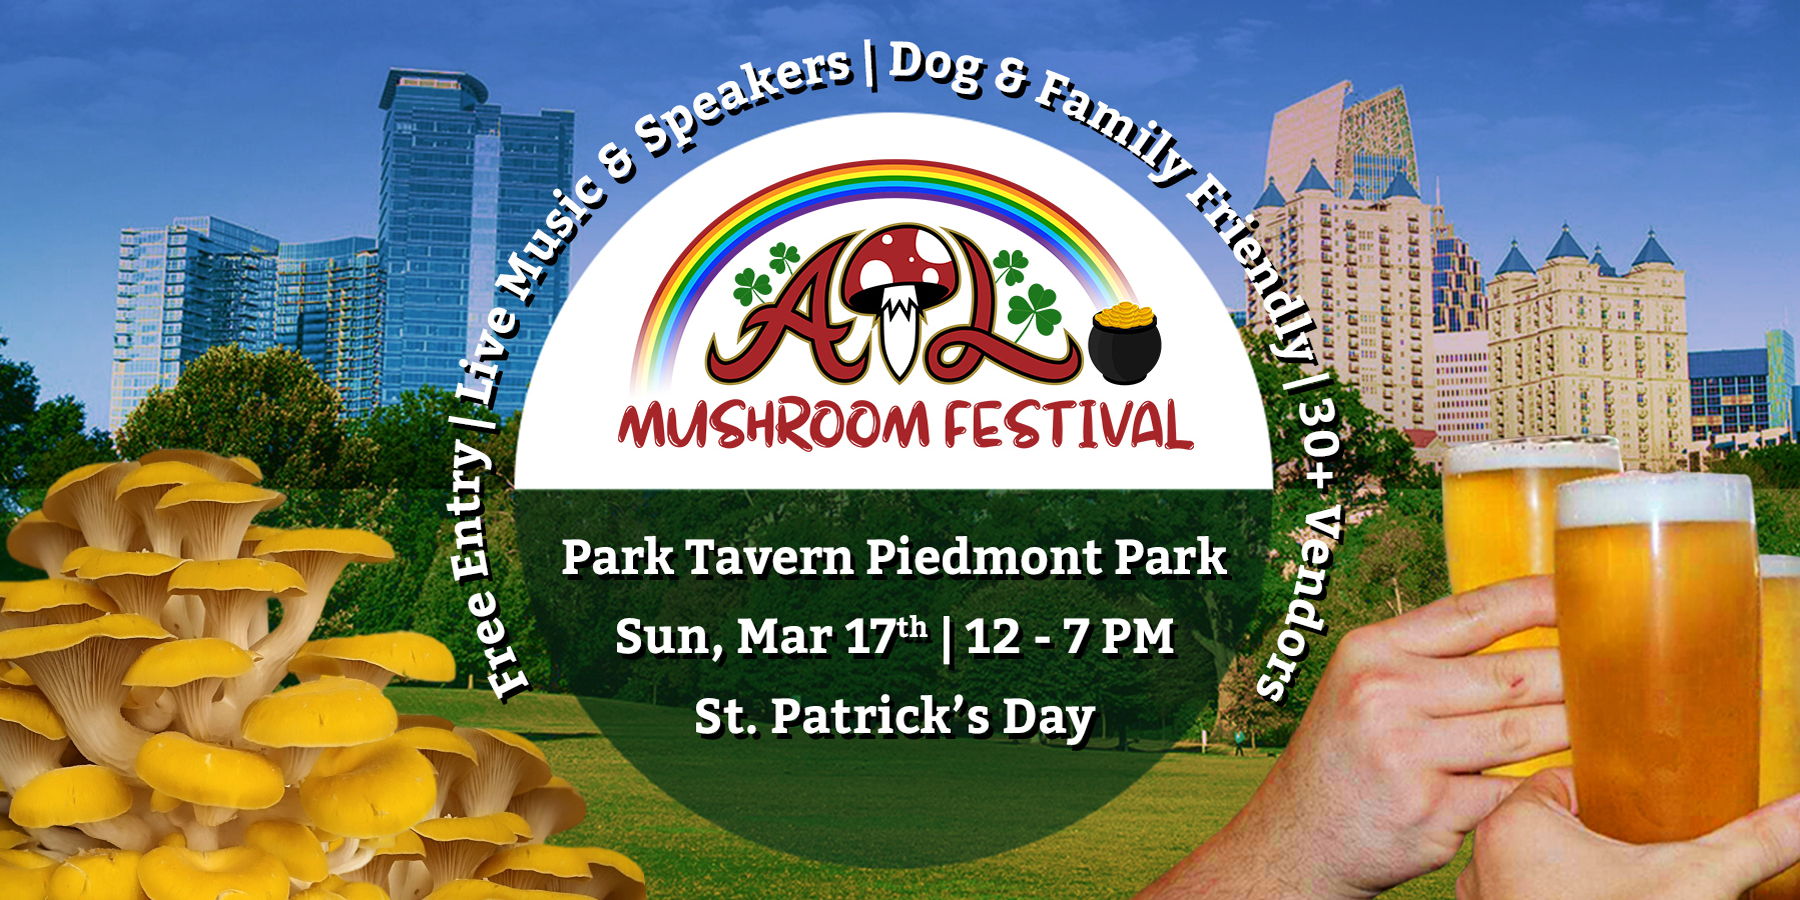 Atlanta Mushroom Festival promotional image